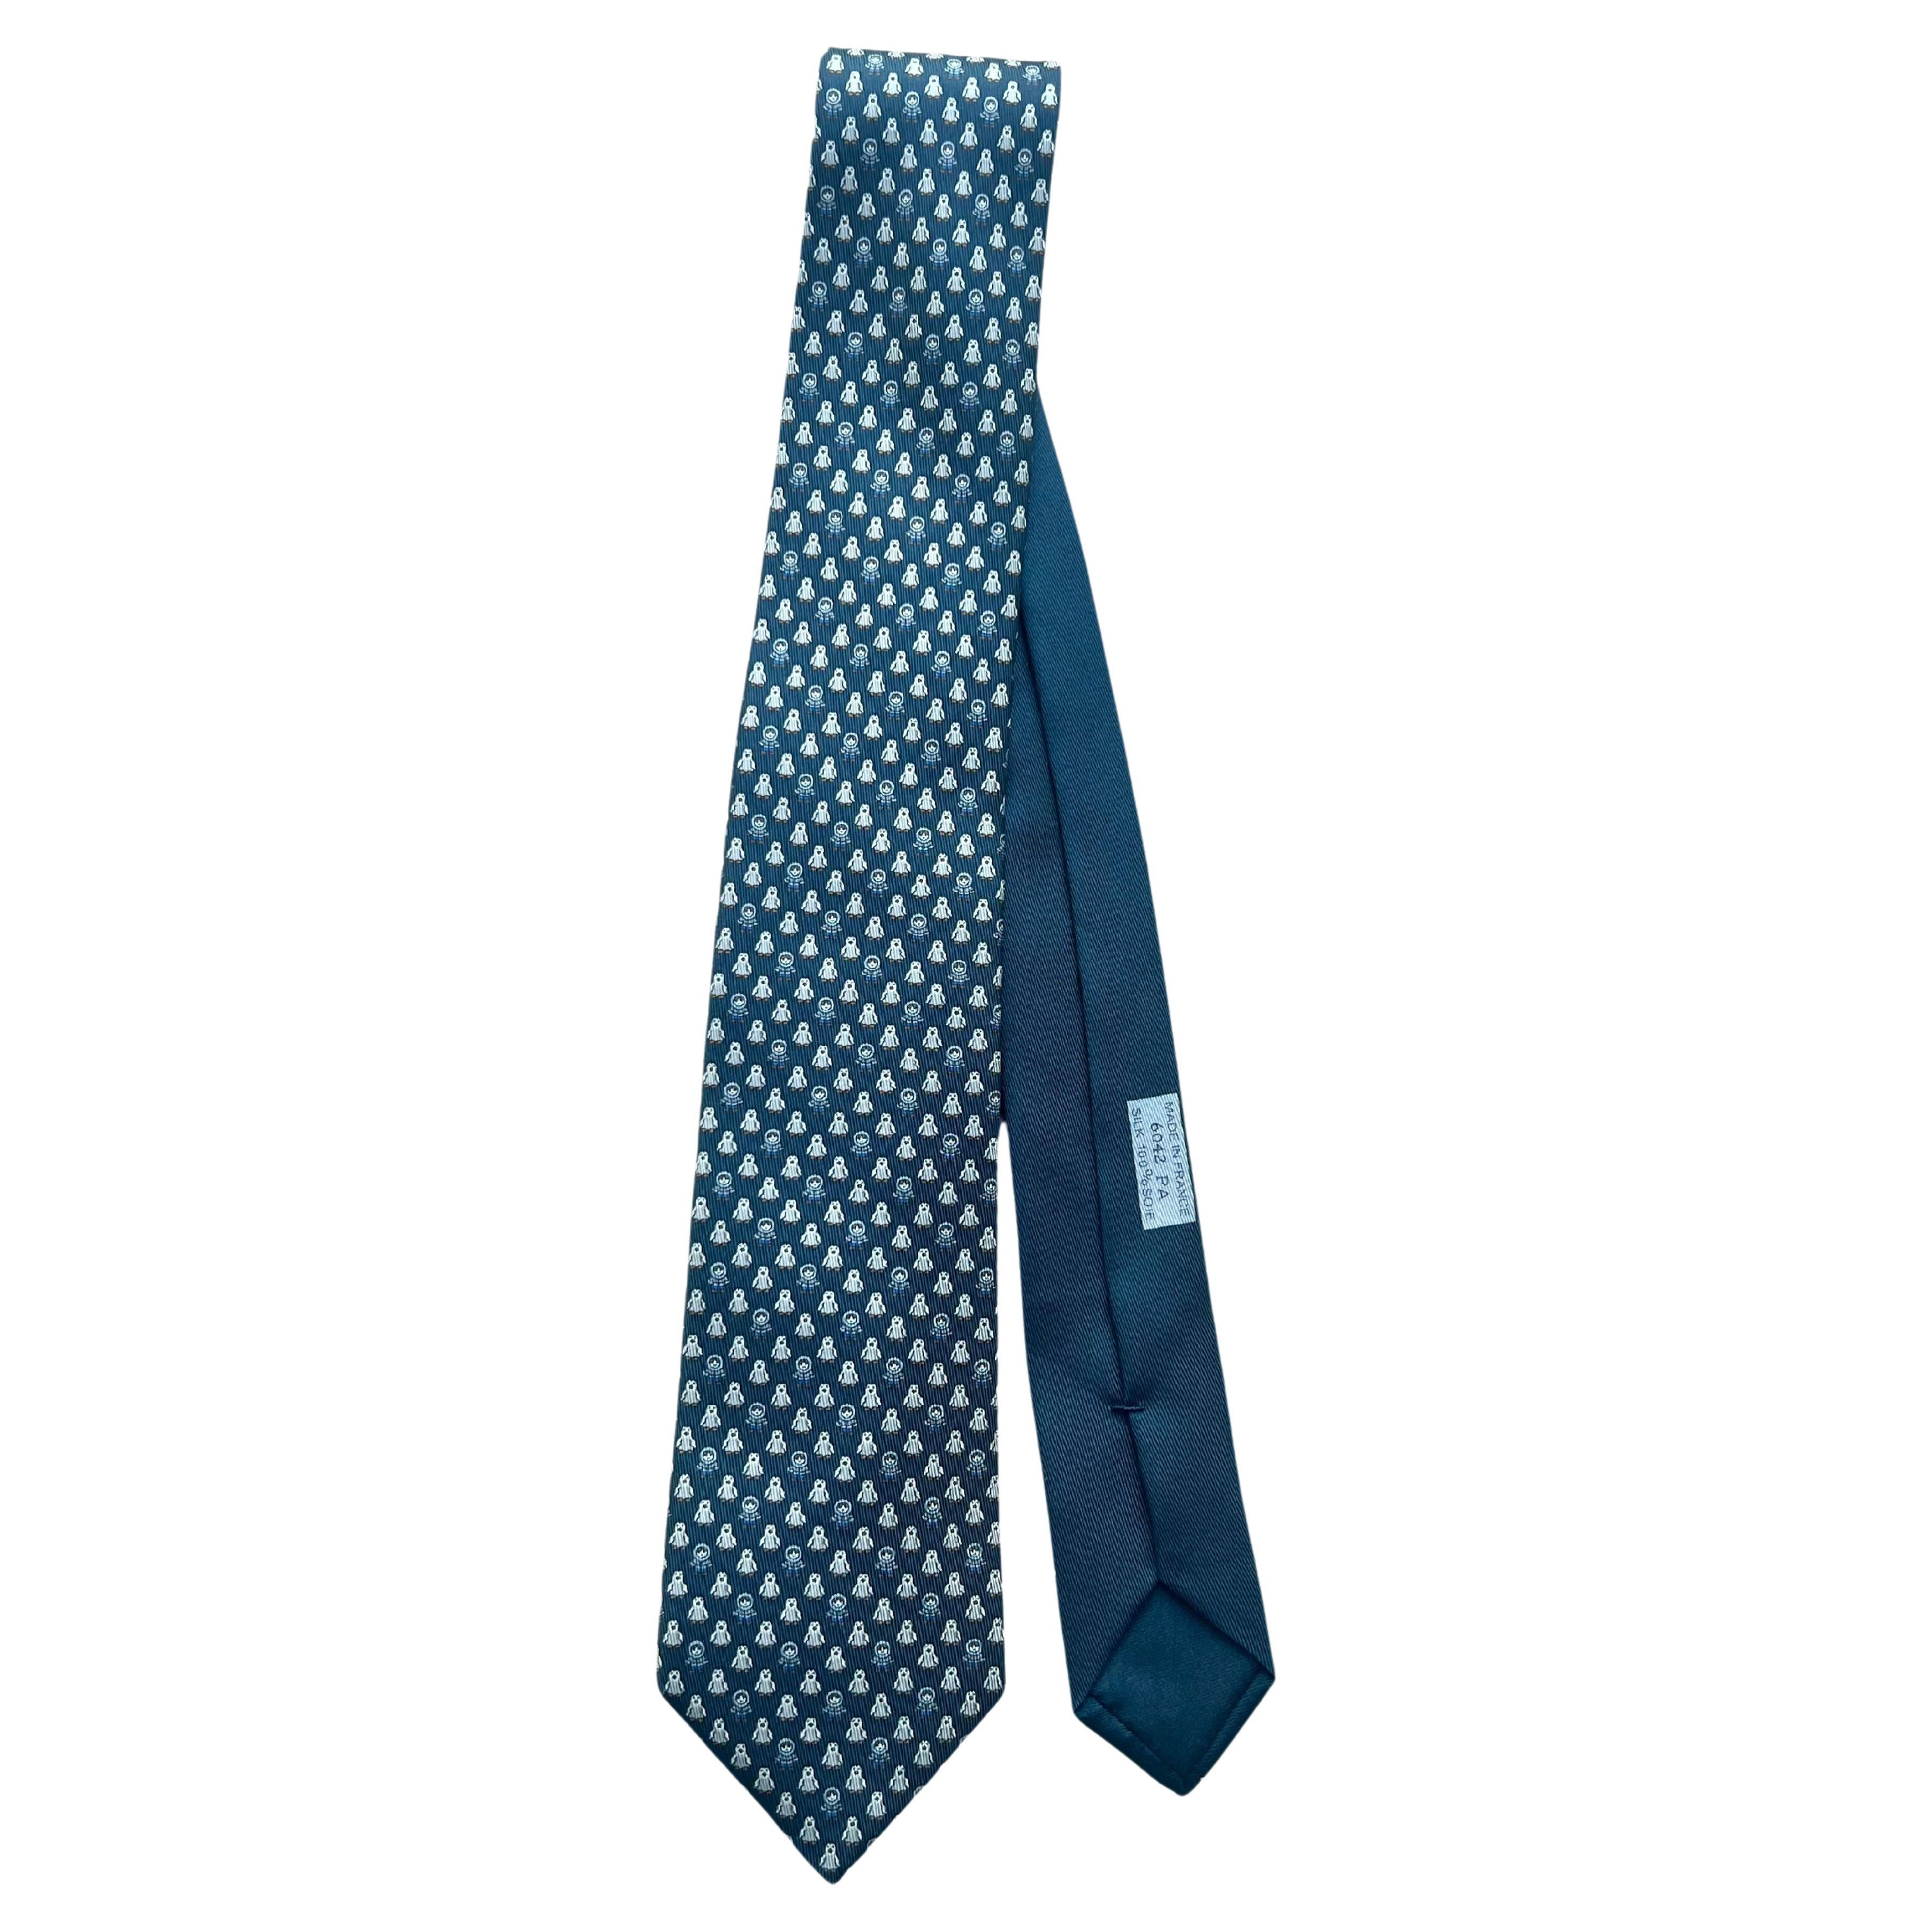 Cravate Hermès PINGLOO Marine, bleu et blanc en vente